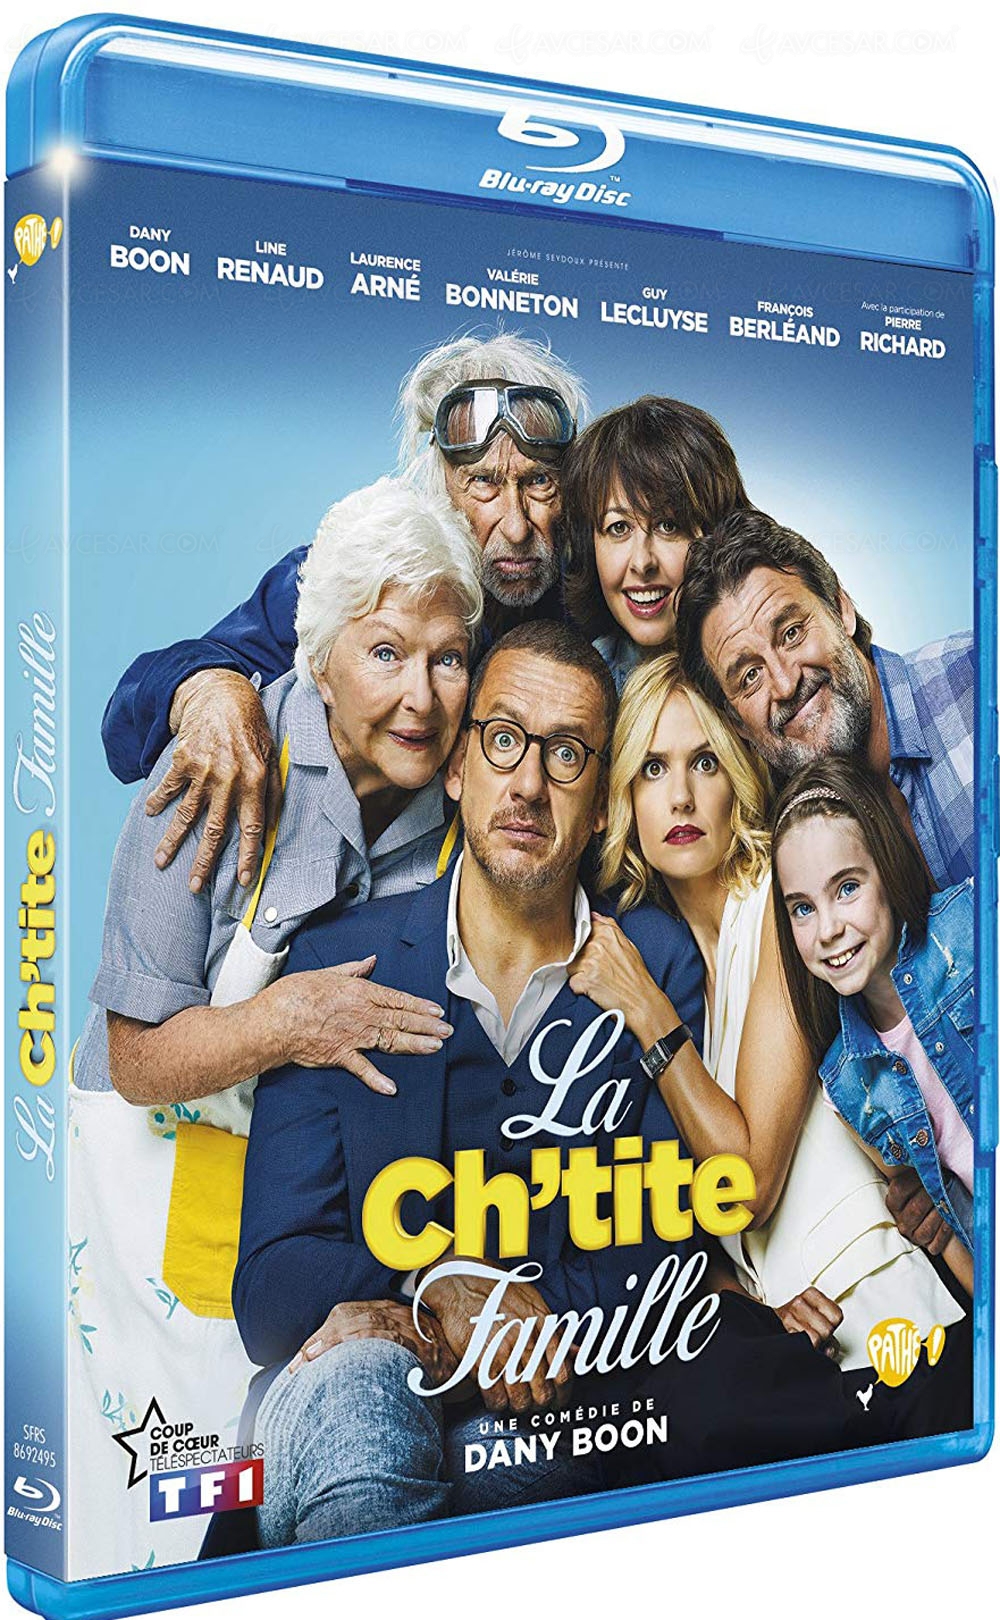 От семьи не убежишь (la Ch'tite famille). От семьи не убежишь 2018 постеры. La chtite Family стул. Dany Boon маленький.